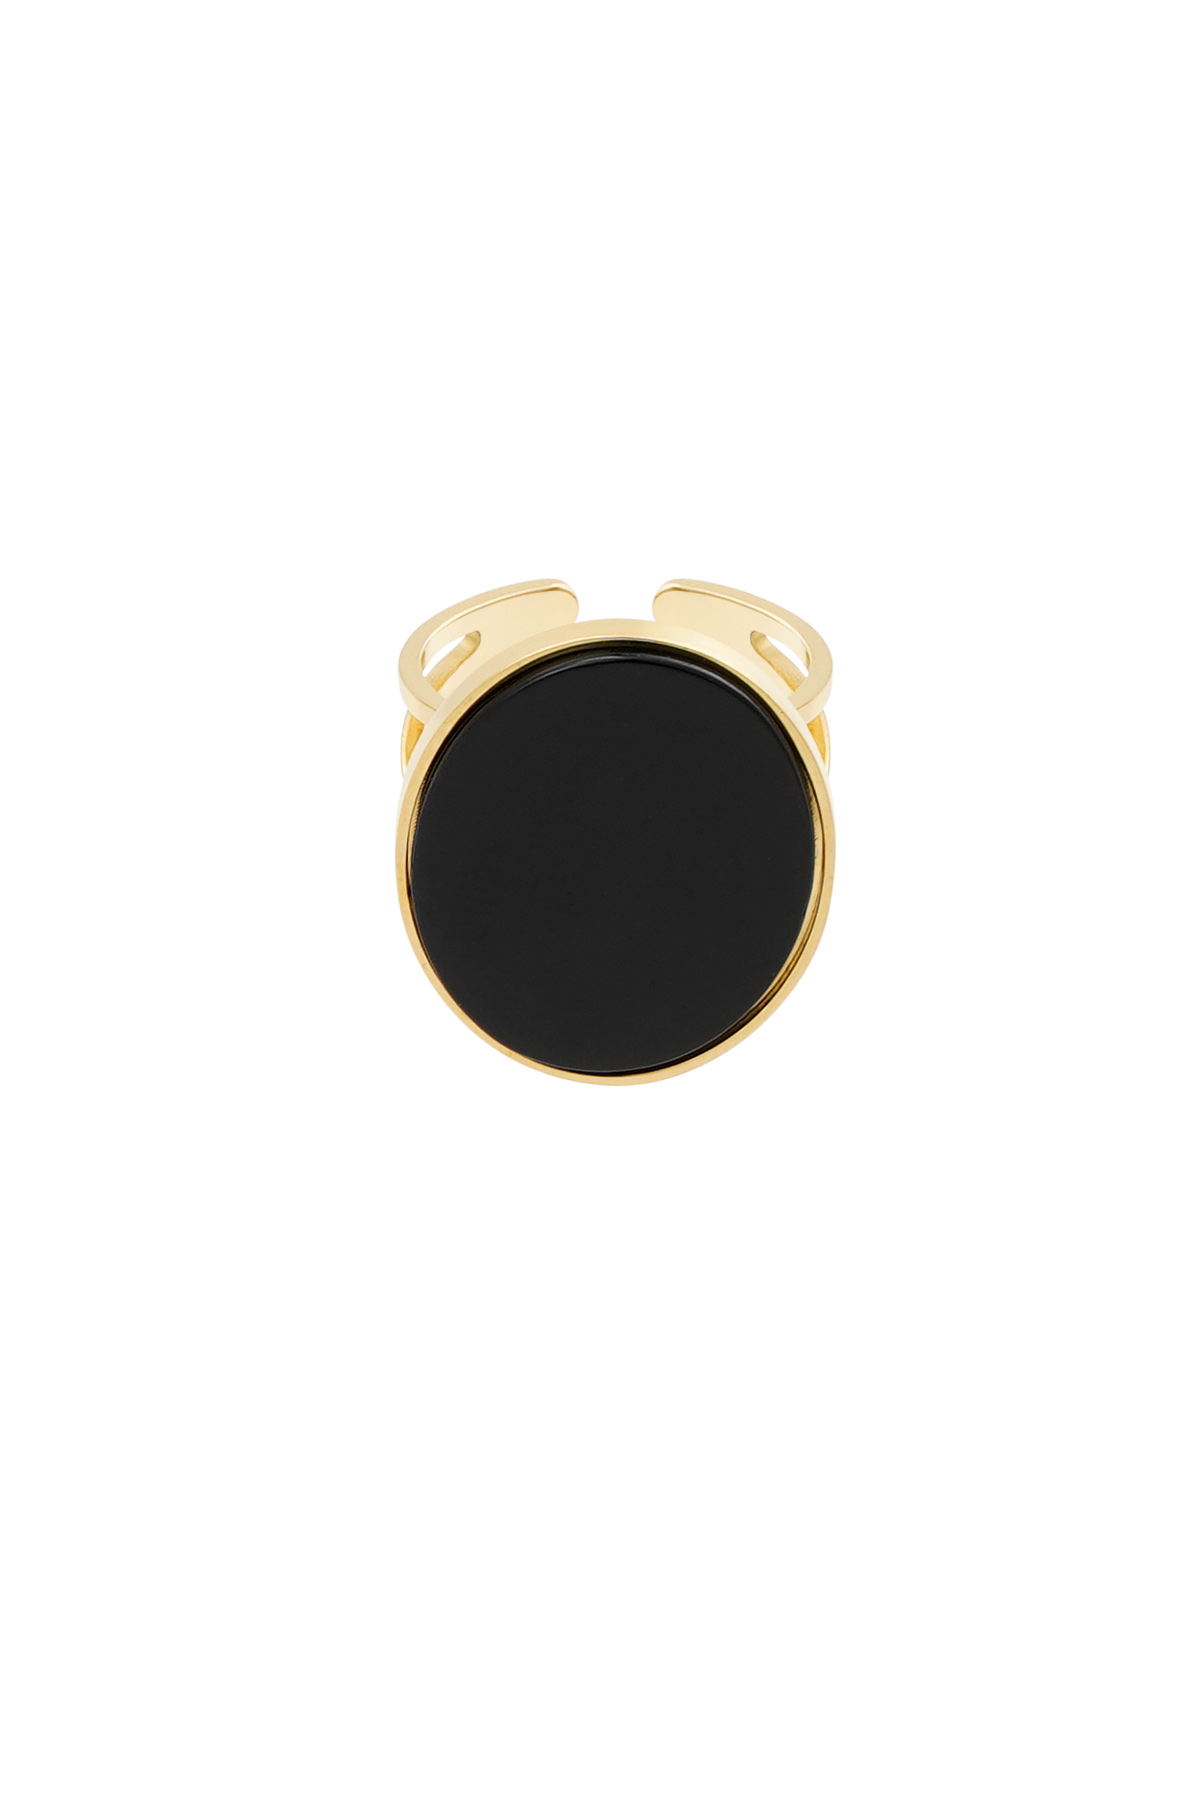 Ring large stone - gold/black h5 